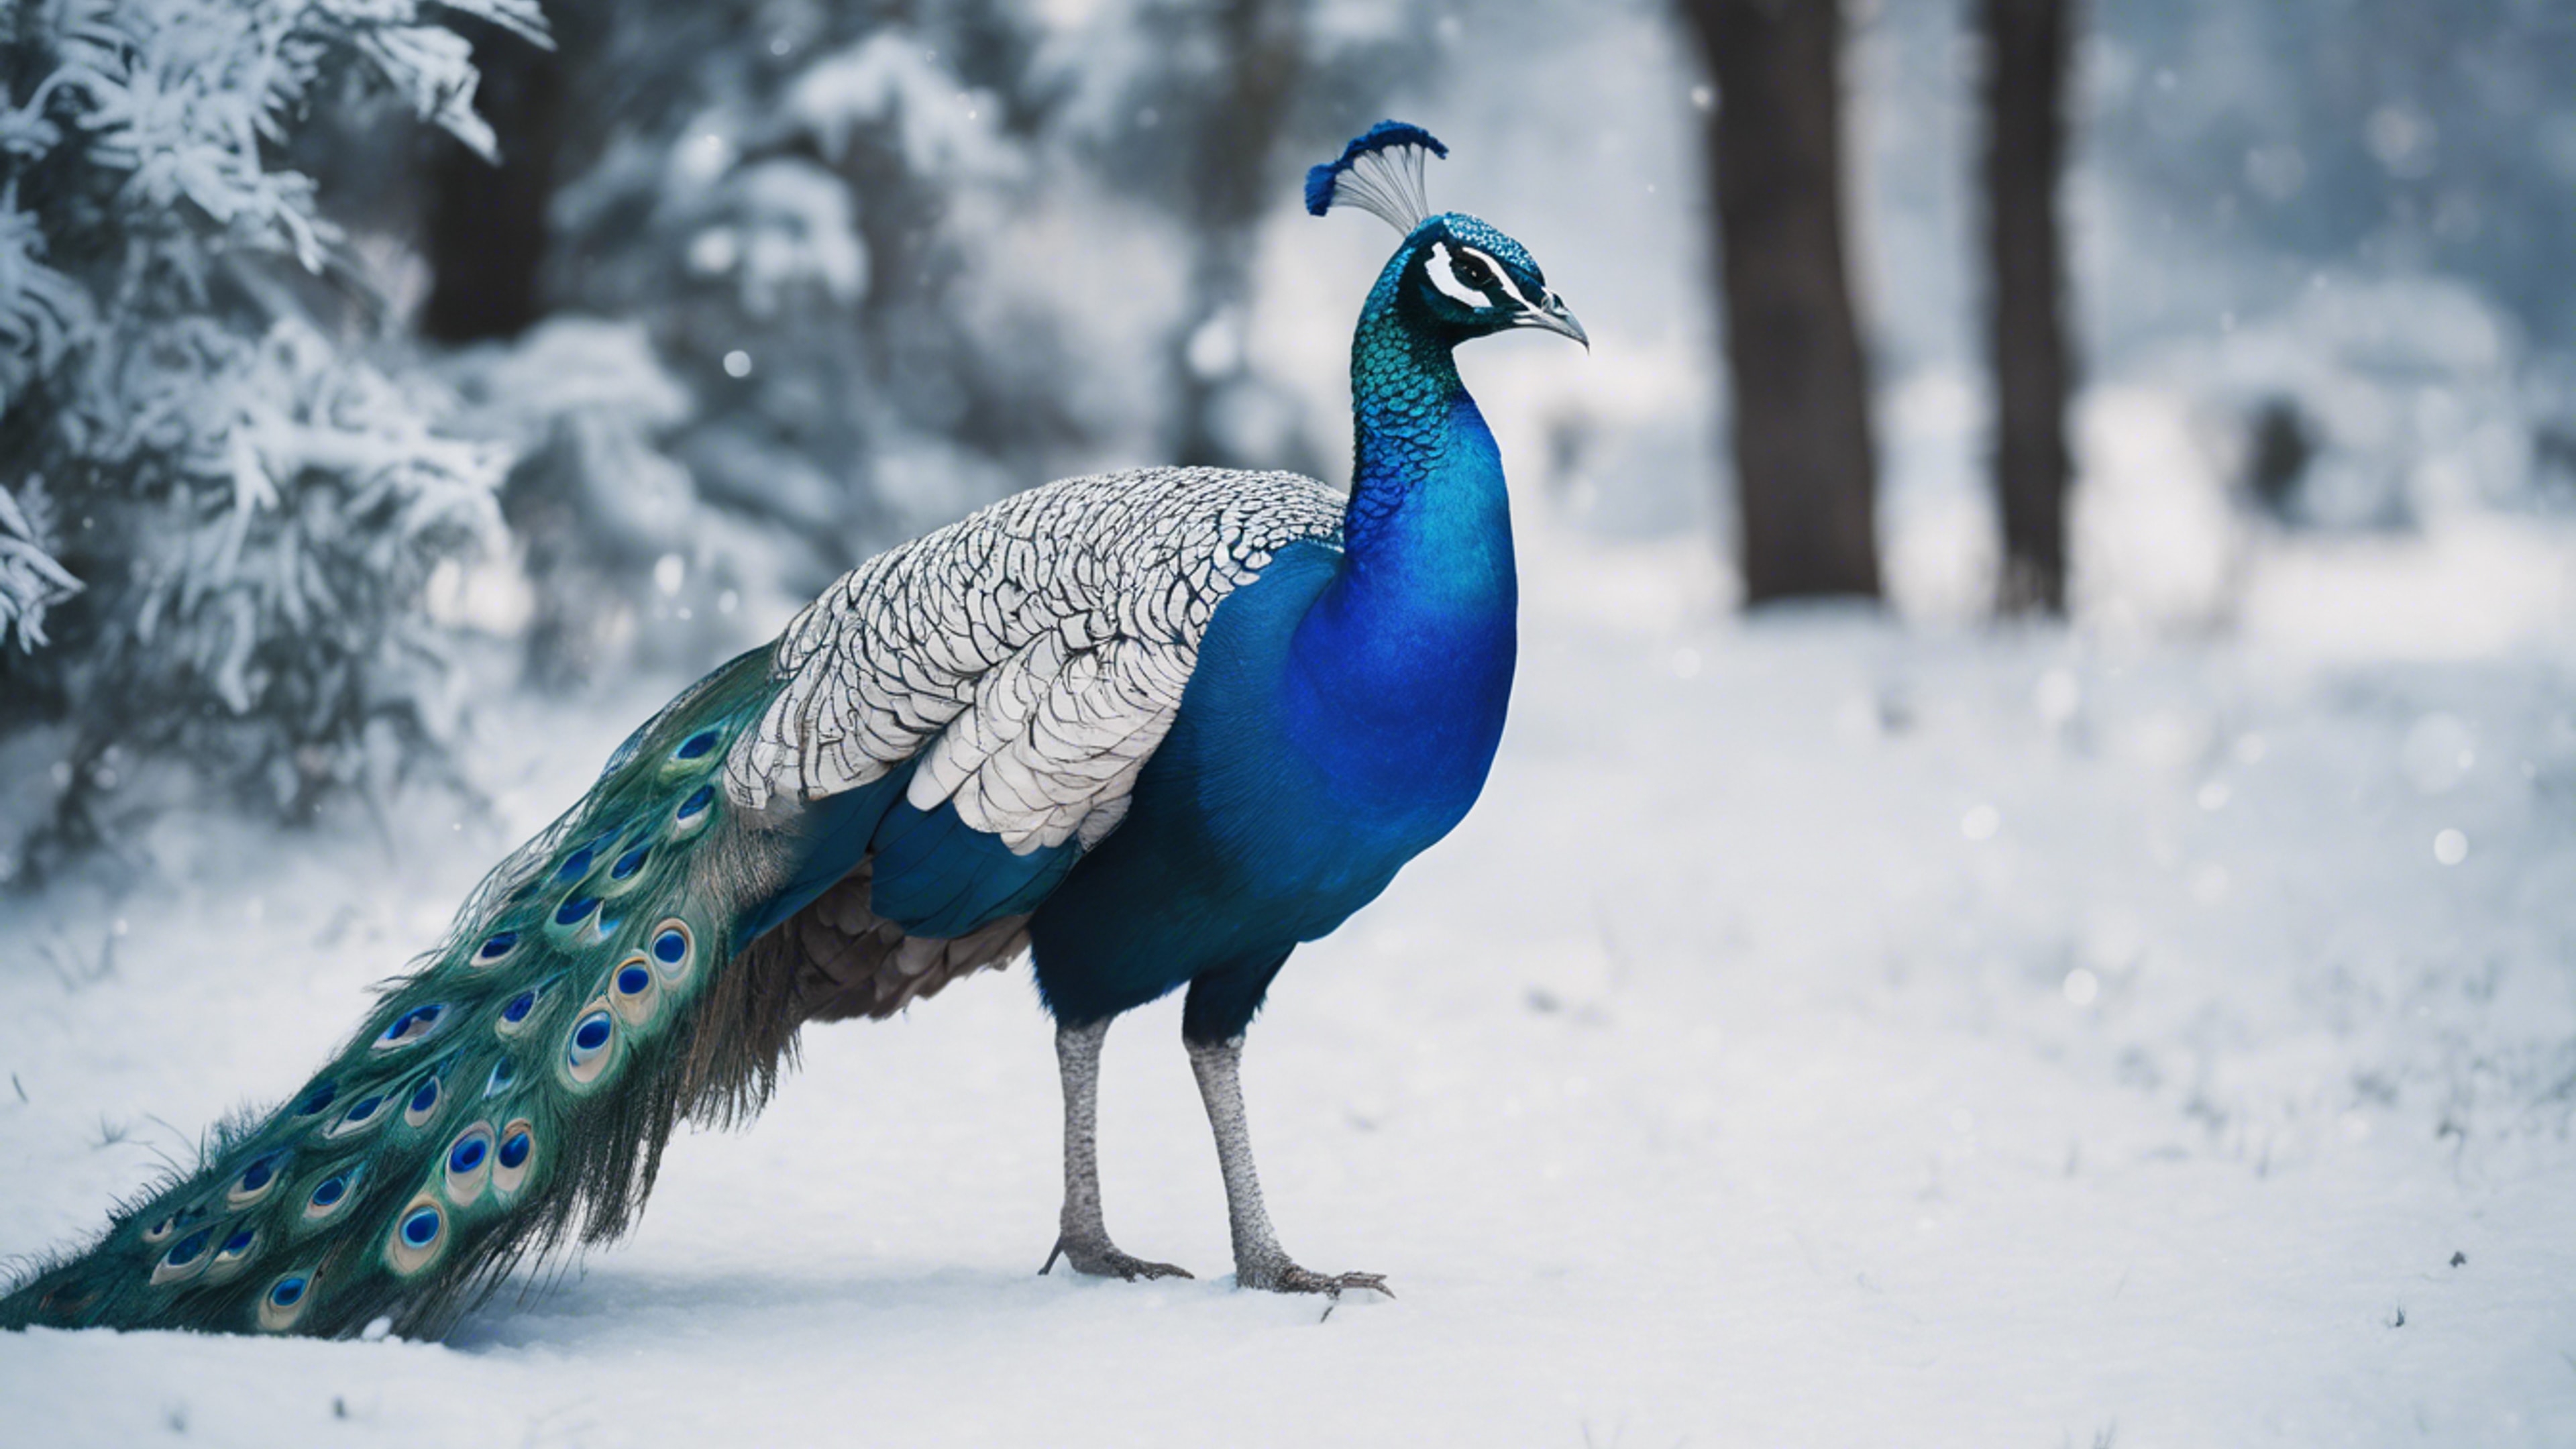 An azure blue peacock with a stunning white crest roaming in a winter wonderland. Wallpaper[75d8e926bbf547baa433]